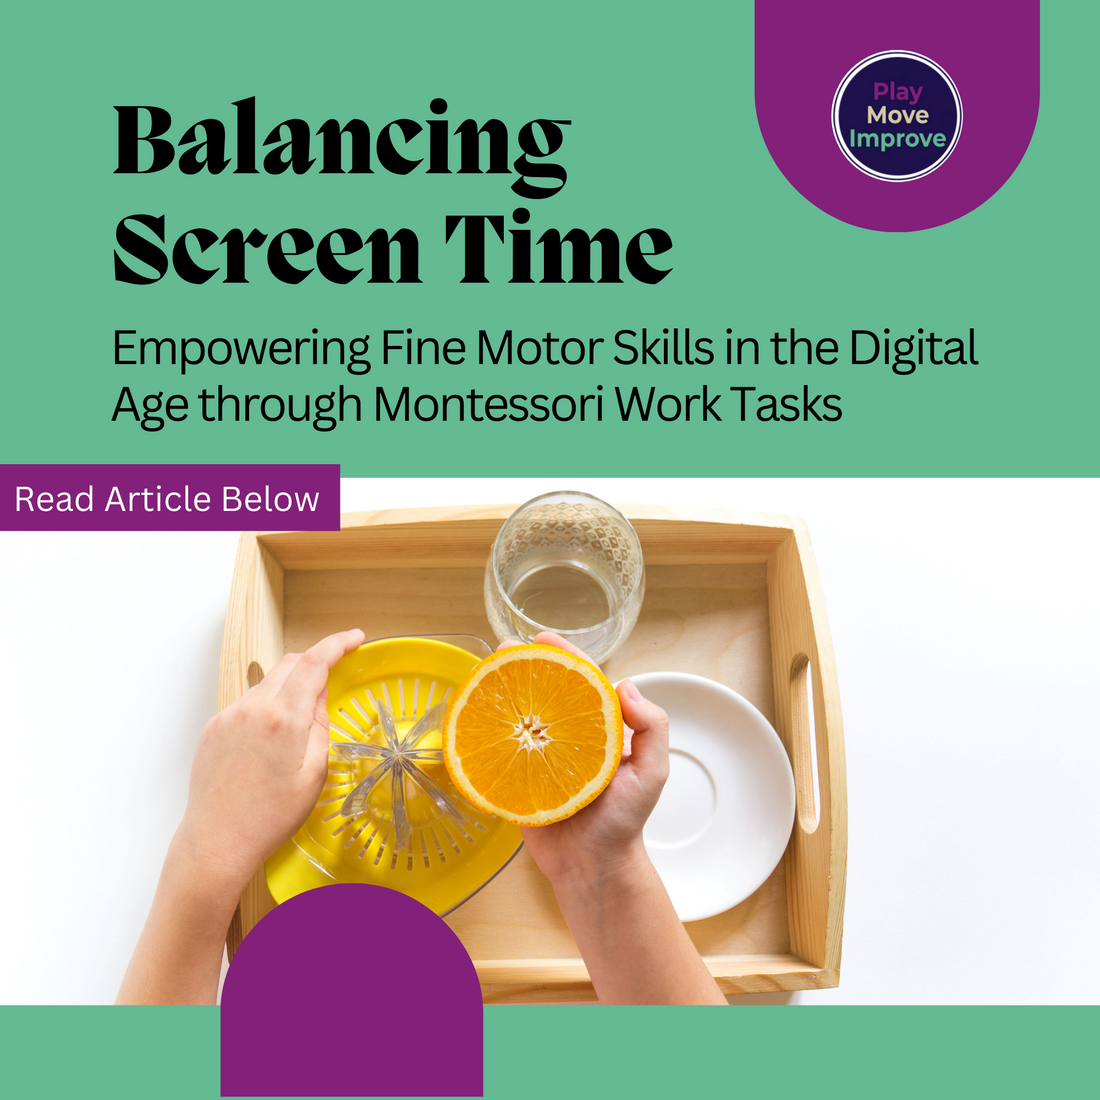 Balancing Screen Time with Fine Motor Skills through Montessori Work Tasks